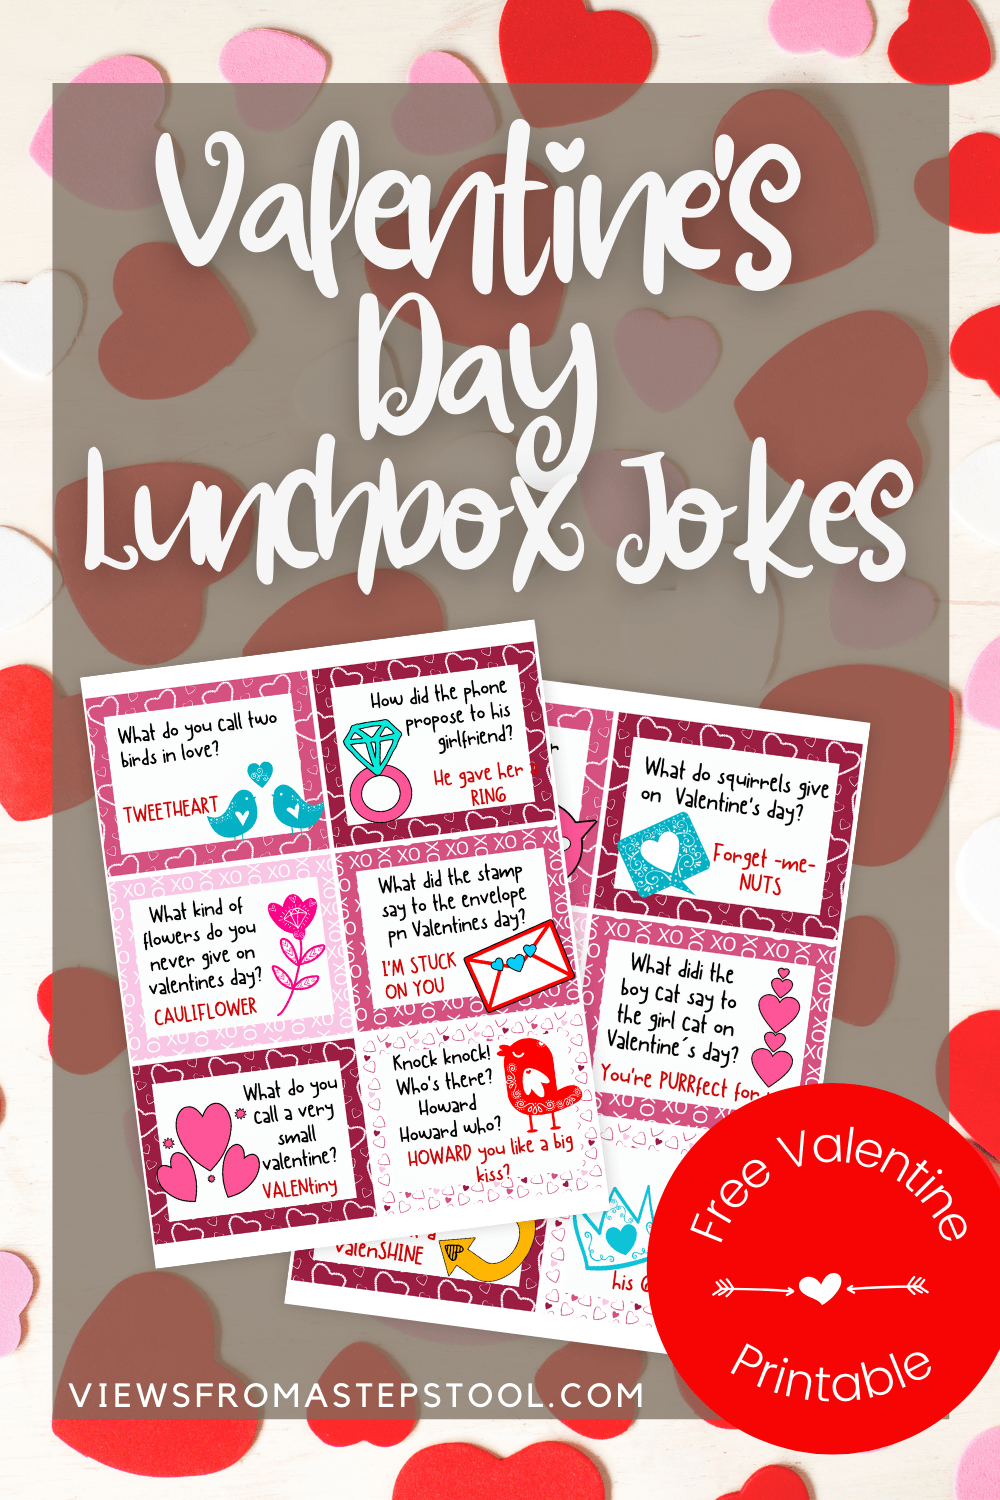 Printable Valentine’s Day Lunchbox Jokes